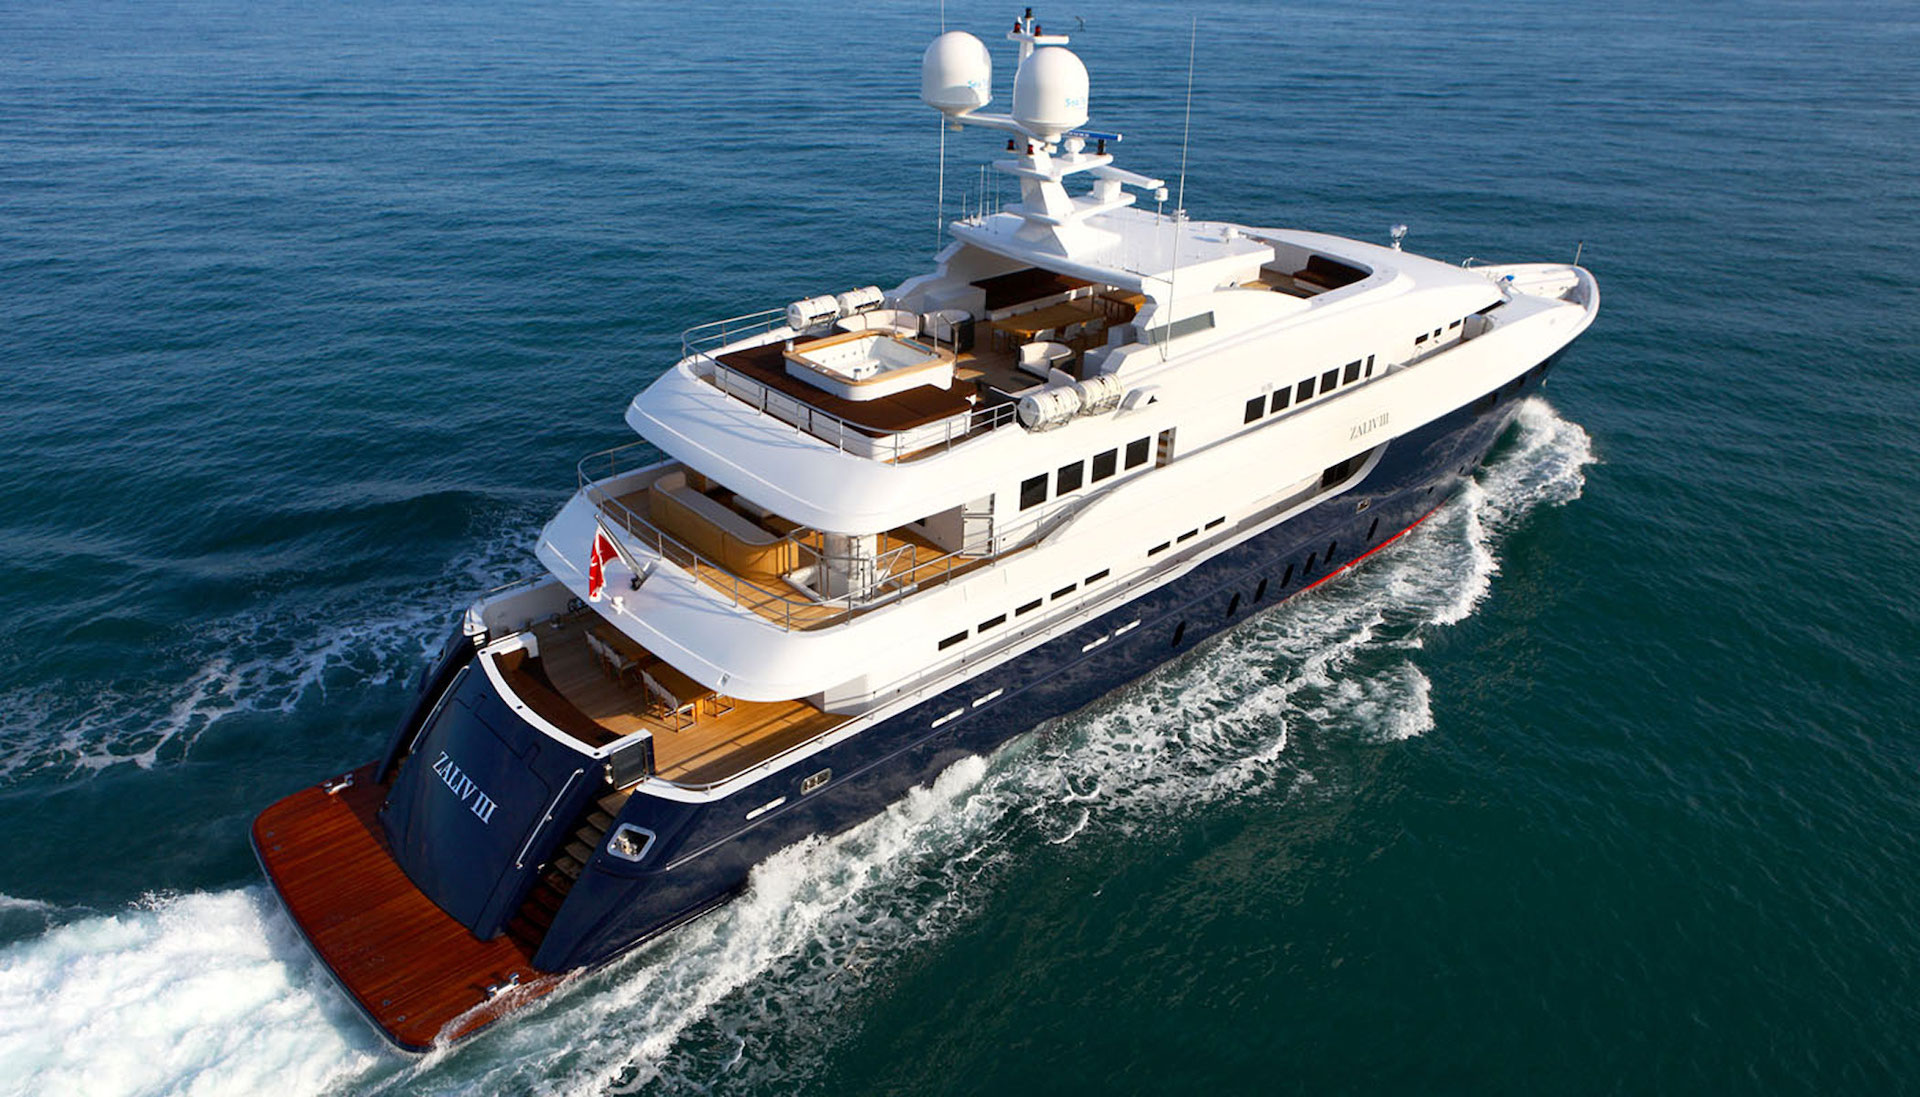 zaliv iii yacht owner